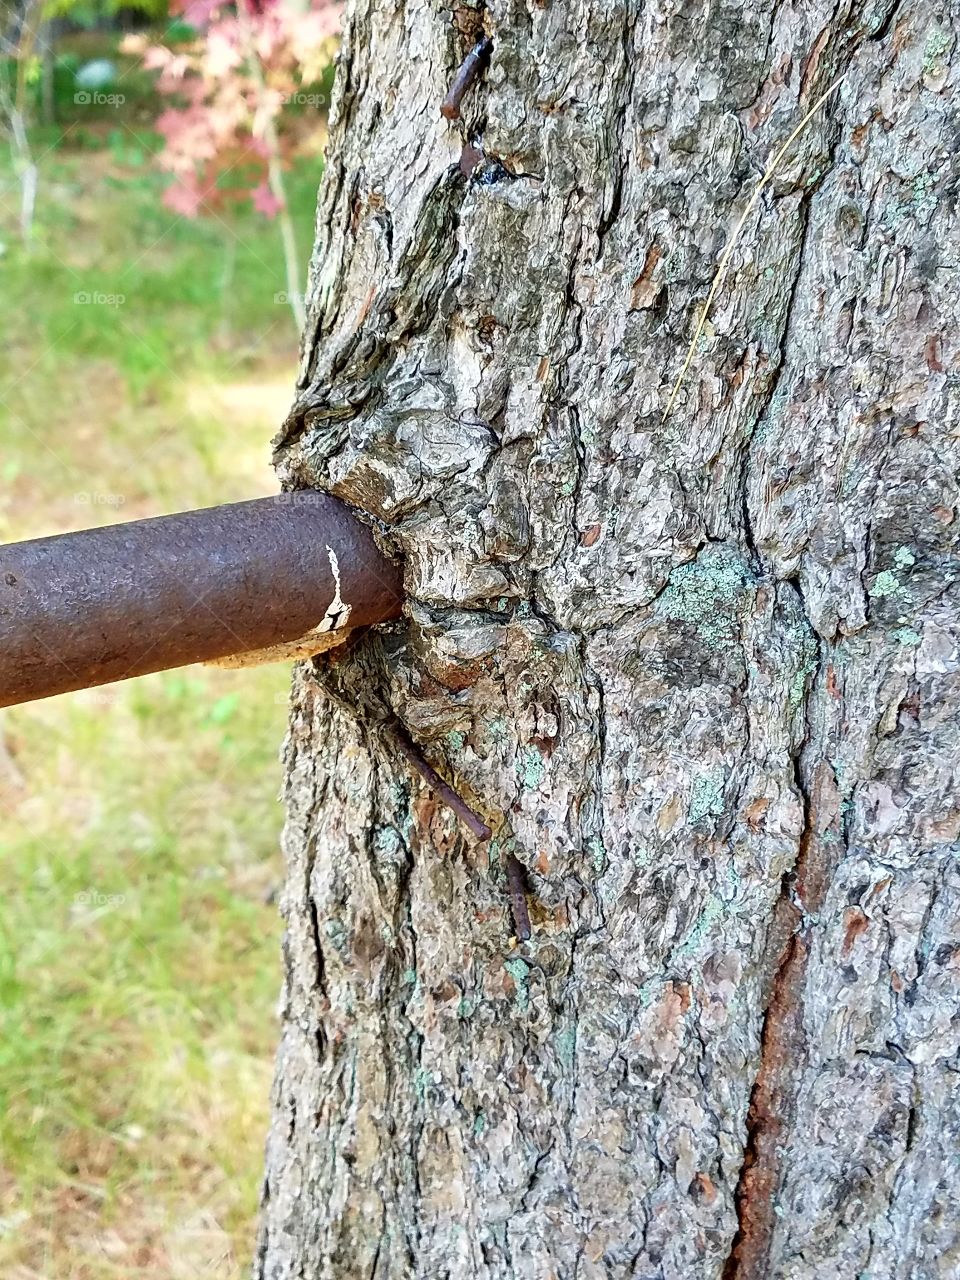 Metal bar embedded into tree.